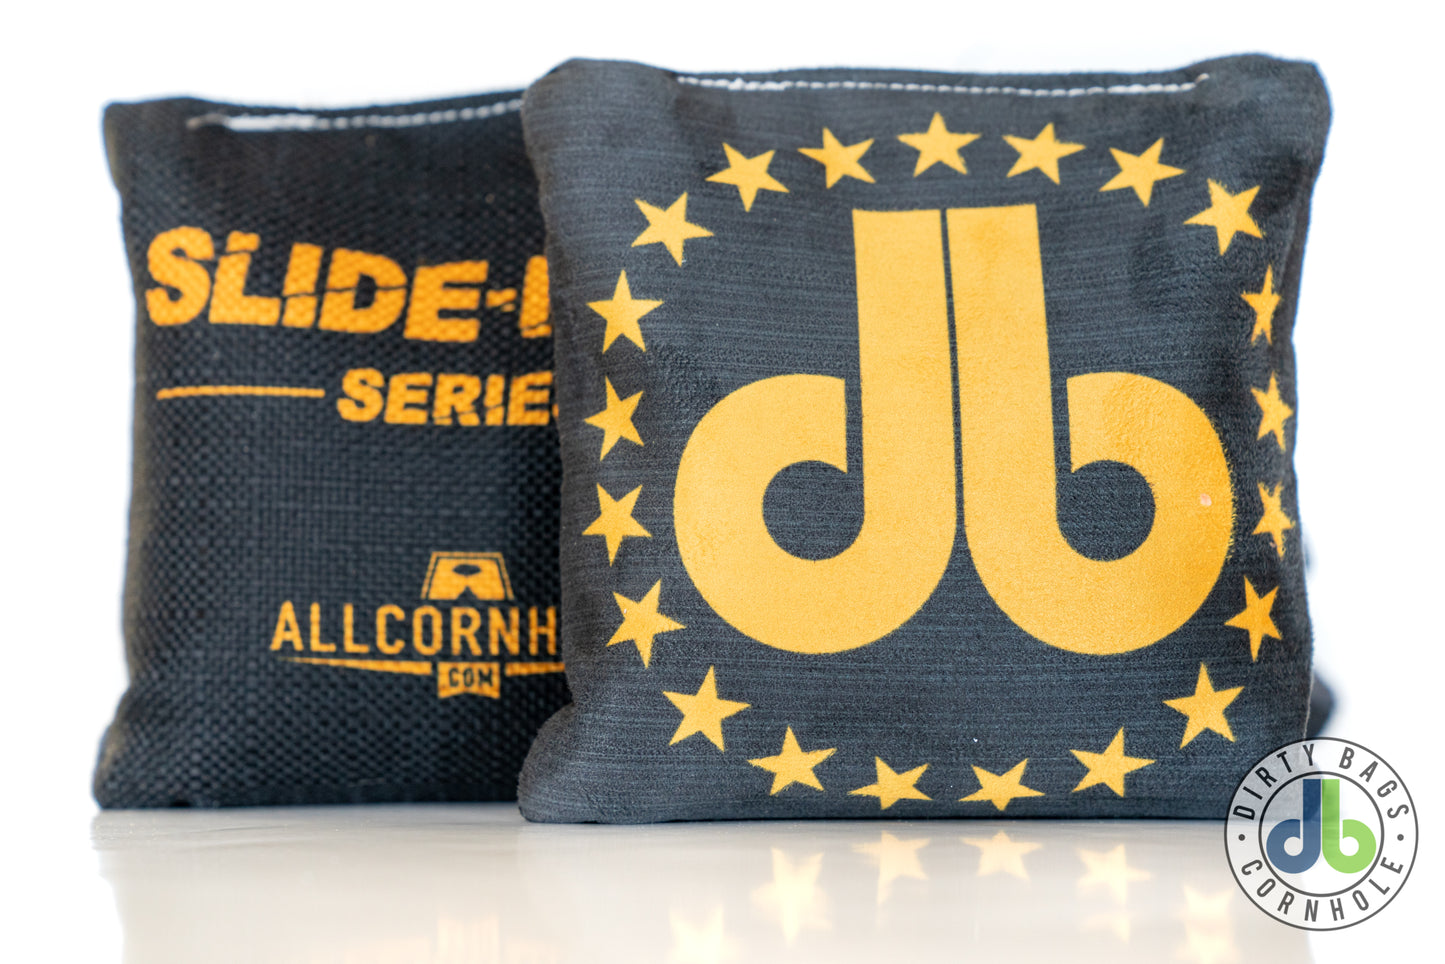 Slide Rite Cornhole Bags - DB Gold Star Edition - Set of 4 bags